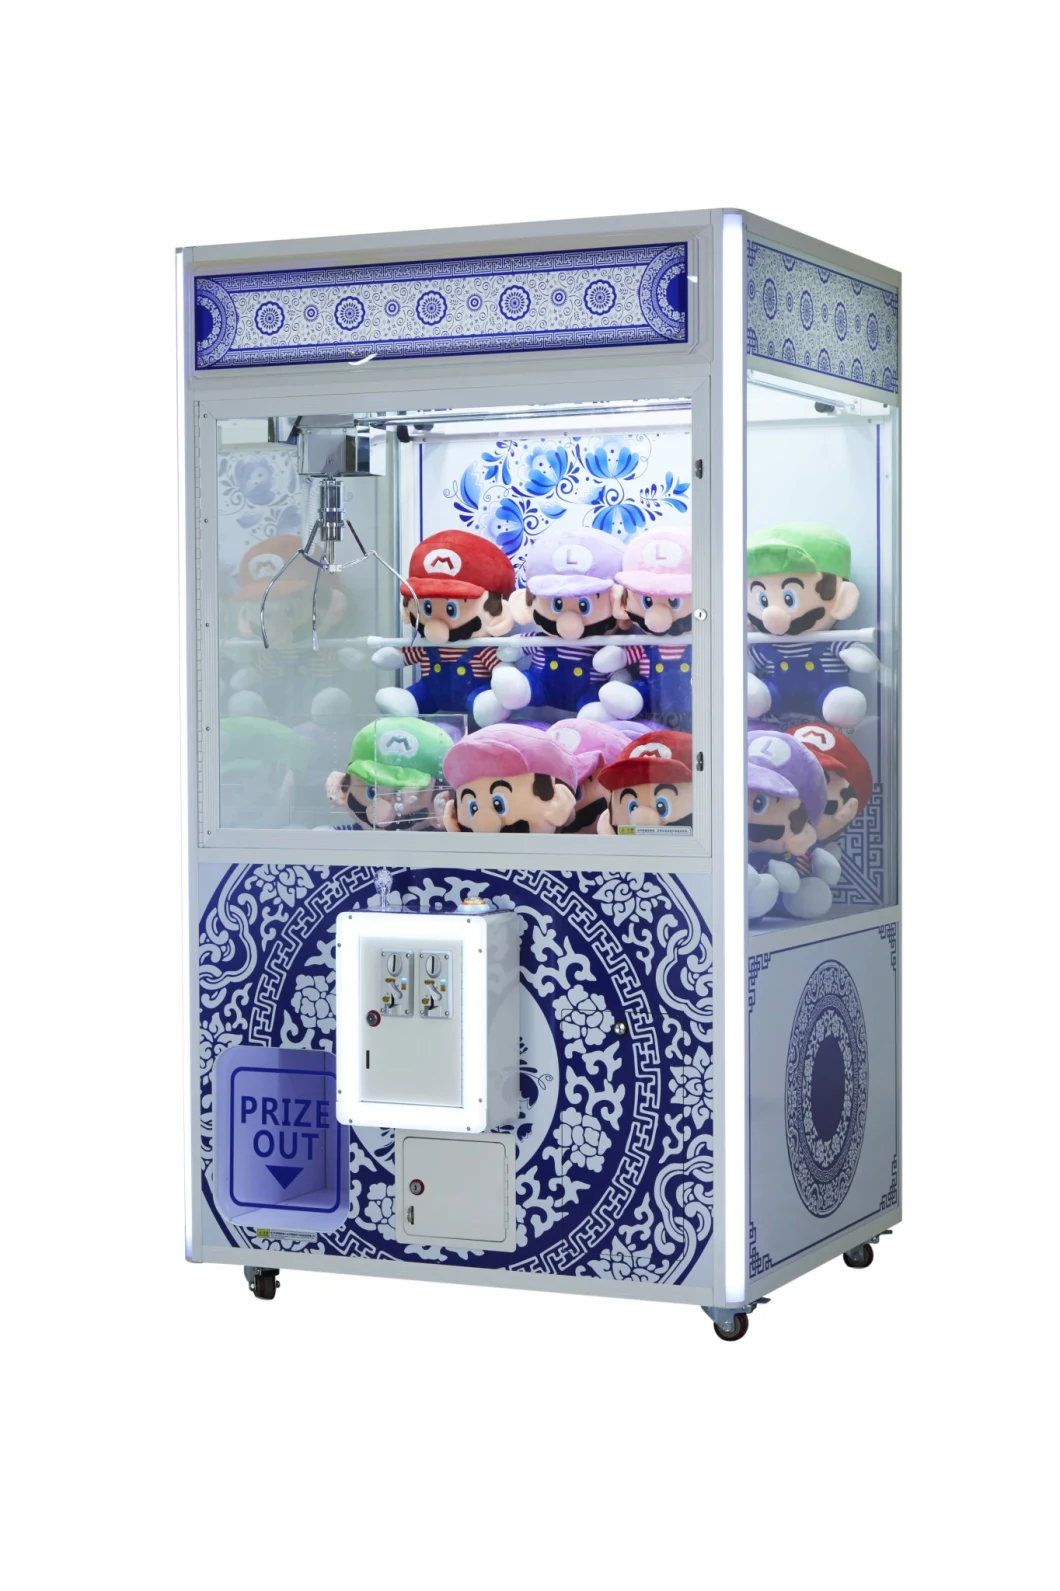 Gift/Toy Vending/Price/Vending/Amusement/Arcade/Game /Claw Machine/Game Player/Arcade Game Machines/Video Game/Amusement Machine/Arcade Machine/Game Machine